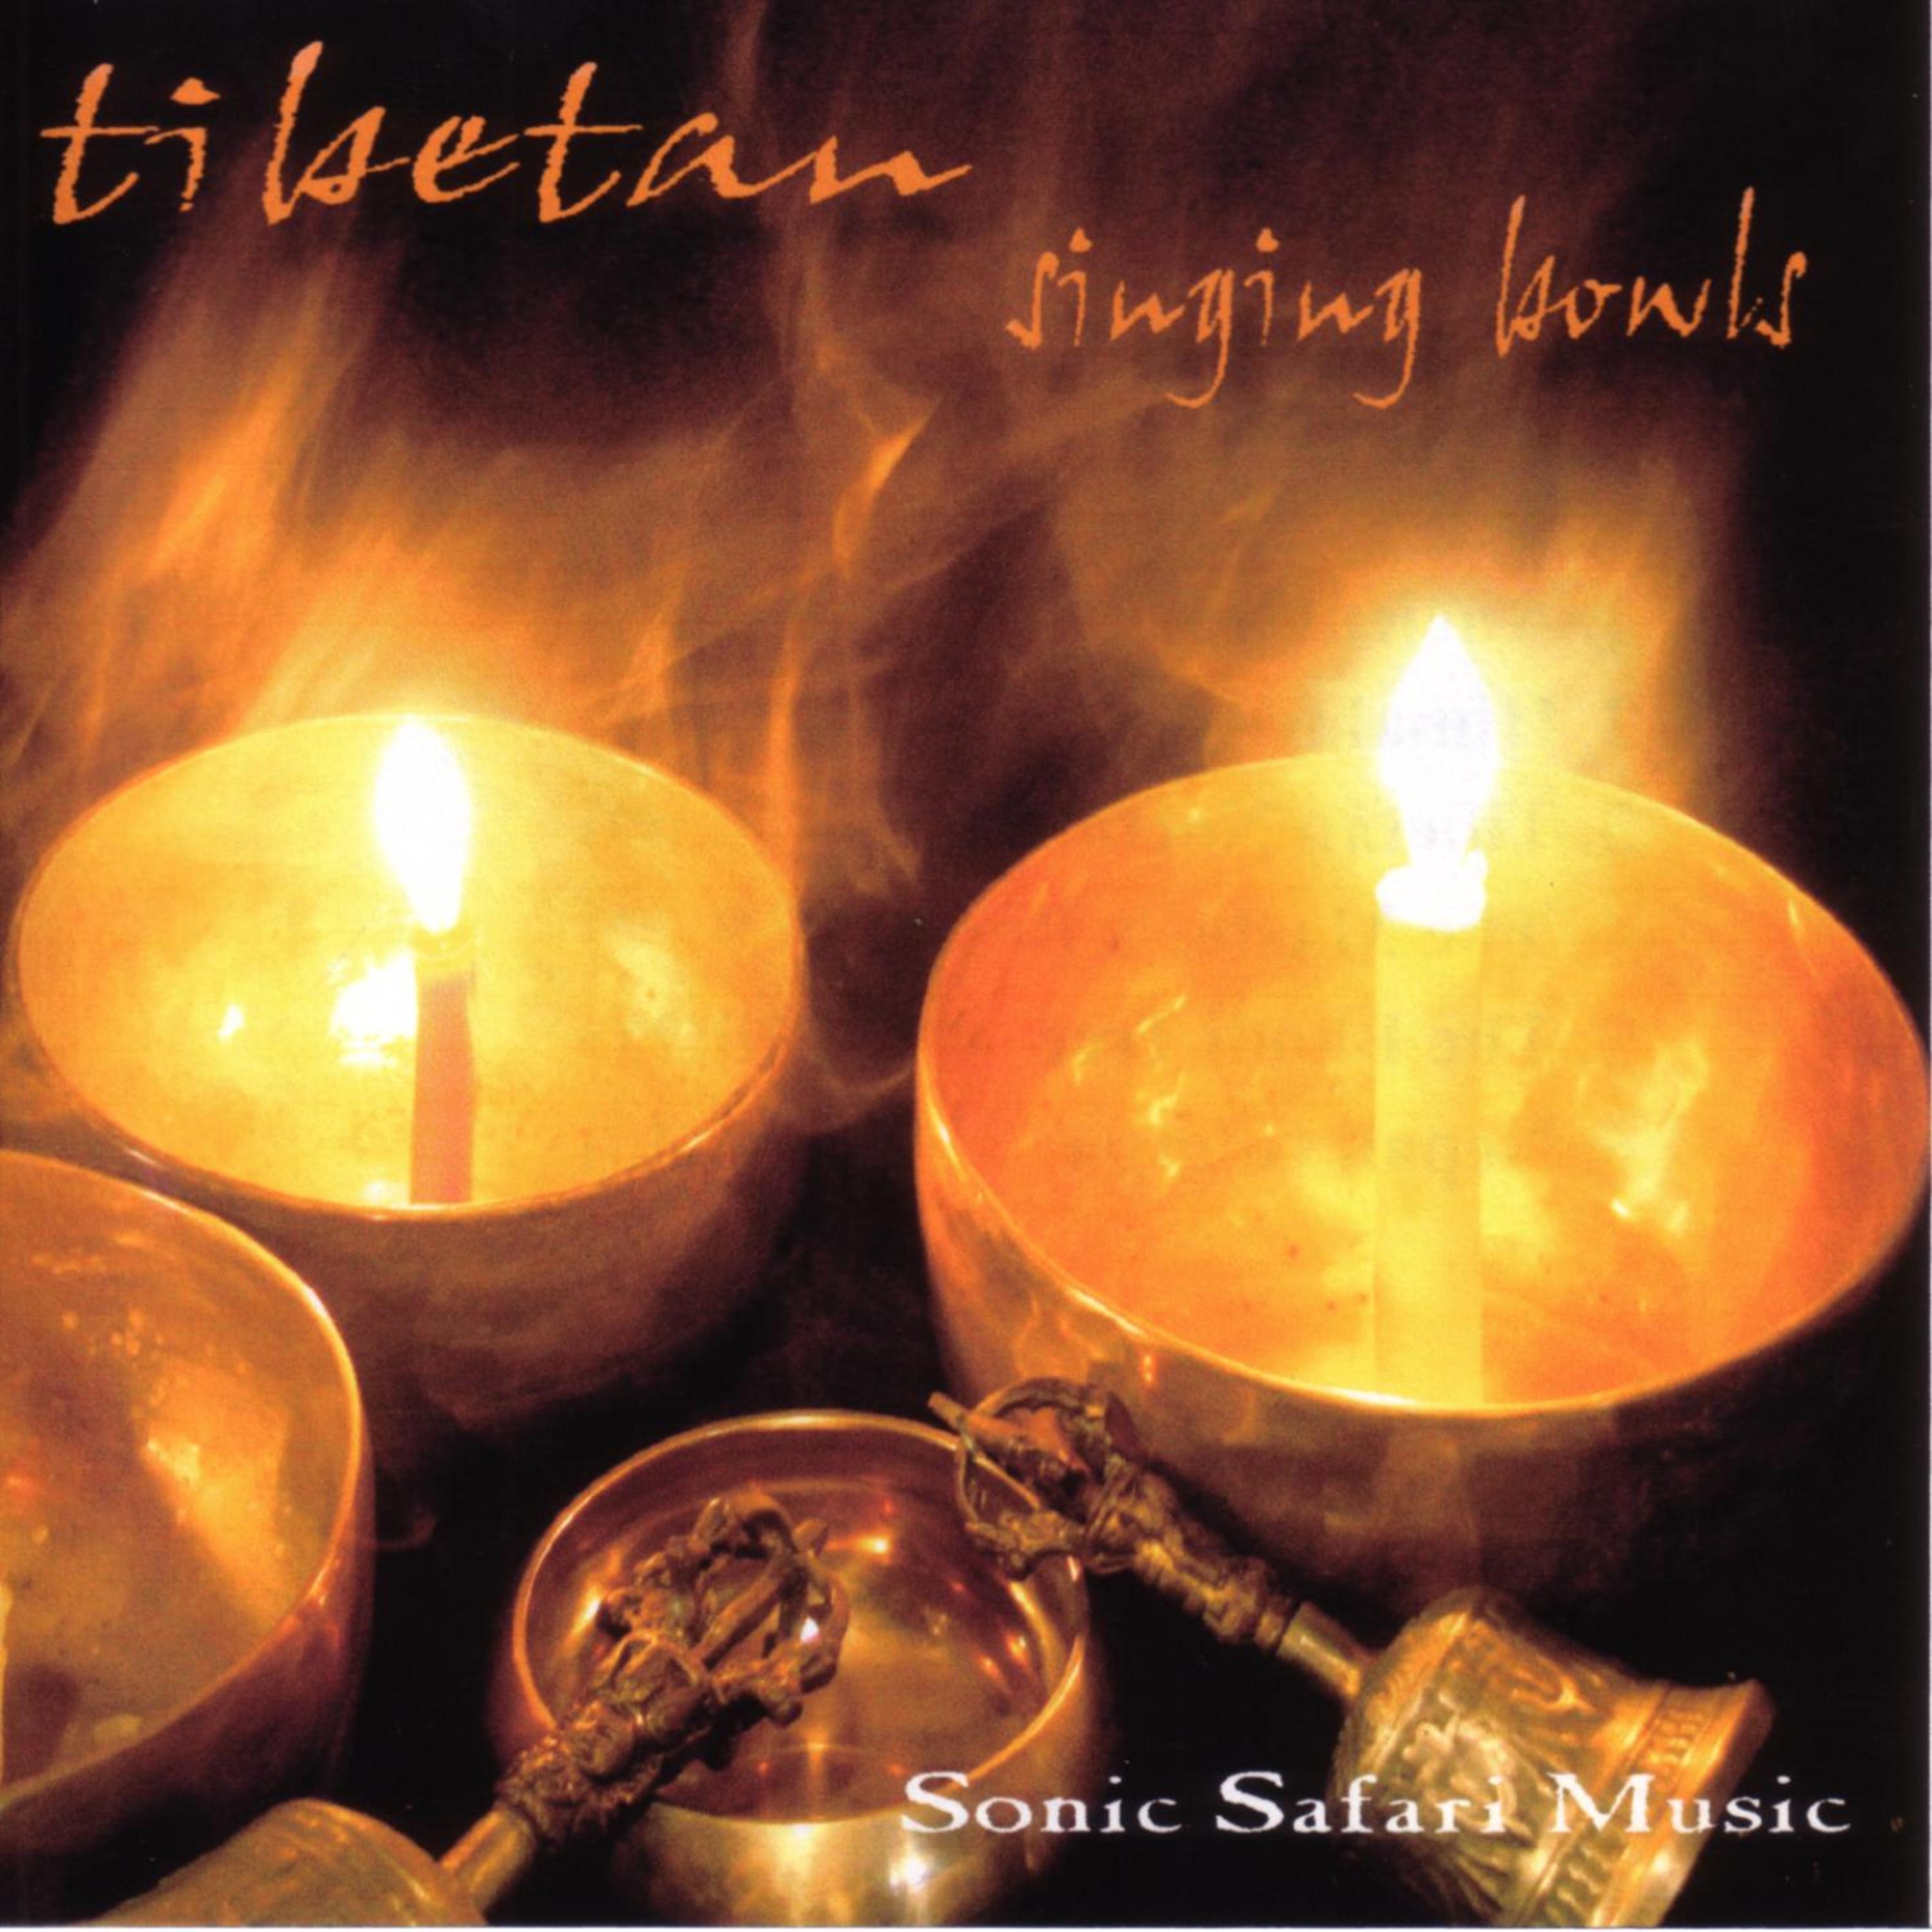 Постер альбома Tibetan Singing Bowls